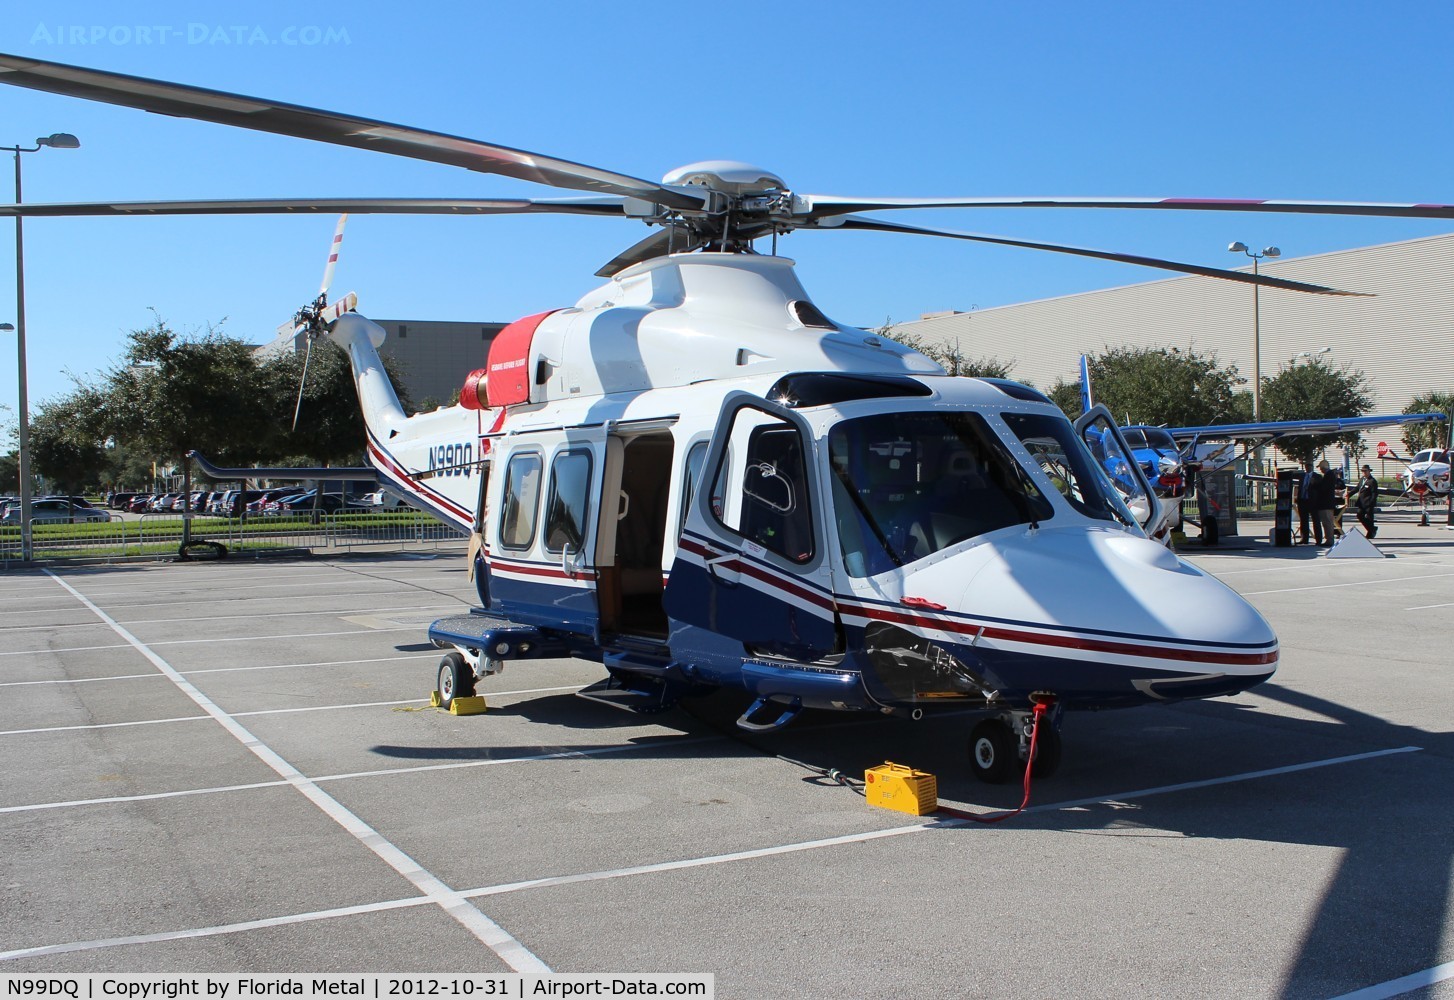 N99DQ, AgustaWestland AW-139 C/N 41219, AW139 at NBAA Orange County Convention Center